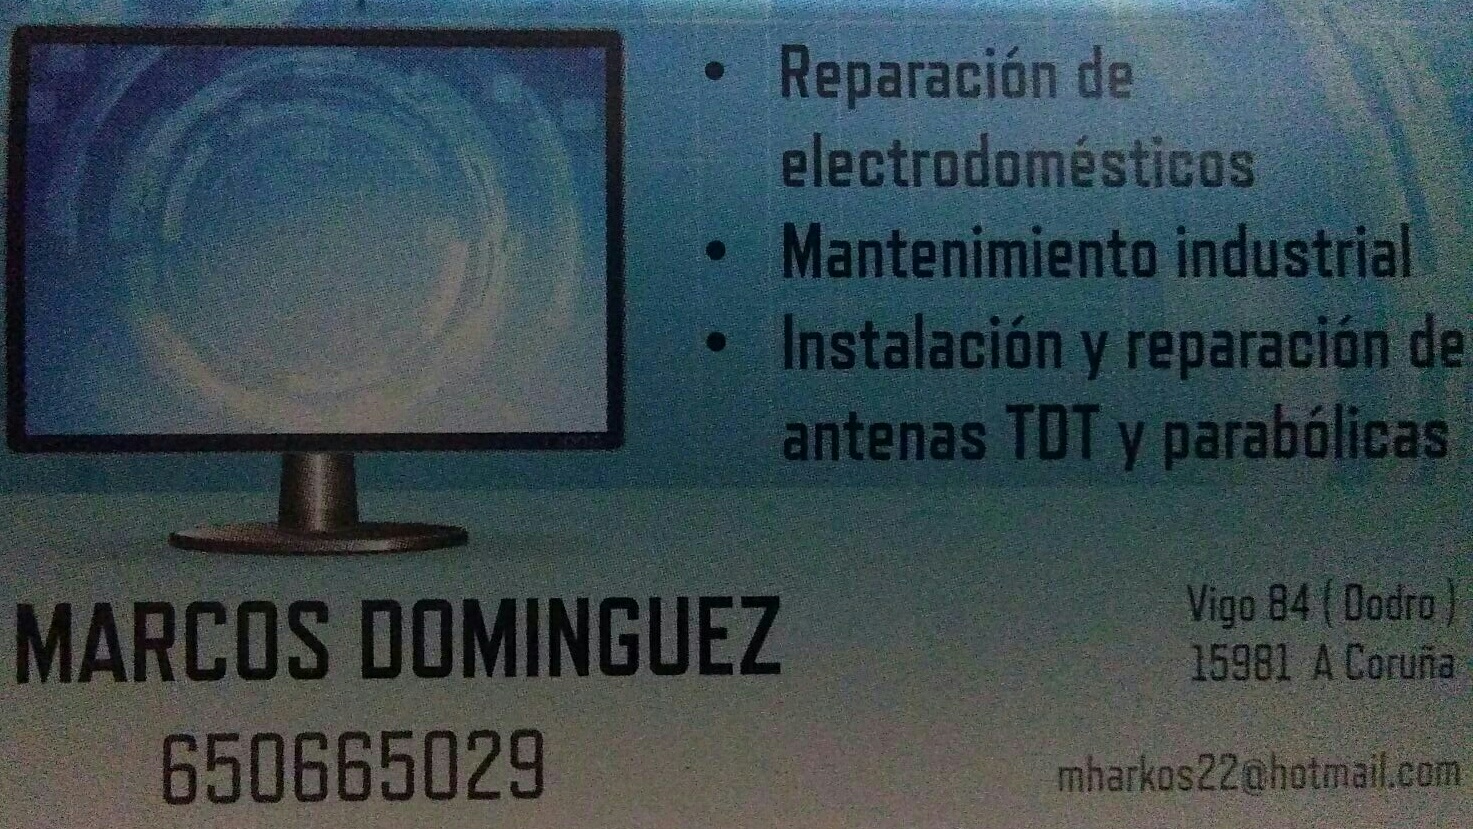 Marcos Domínguez - reparación de electrodomésticos